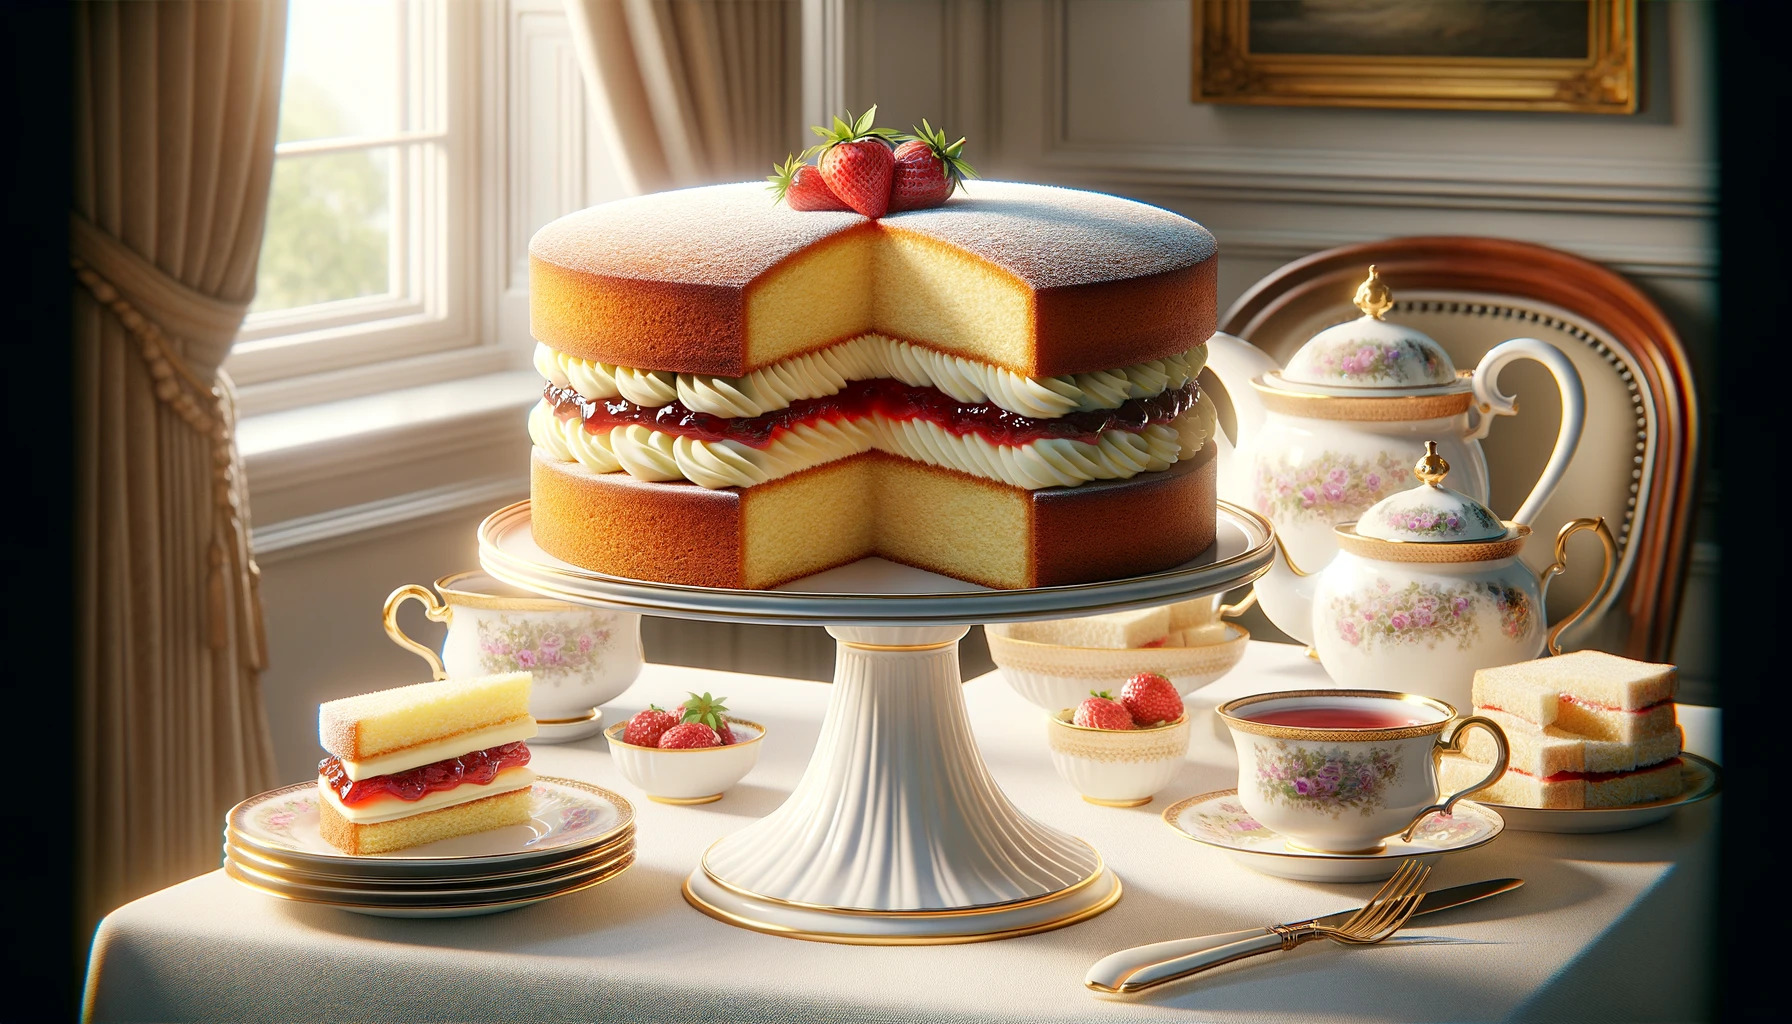 Victoria Sponge Cake: United Kingdom’s Signature Cake